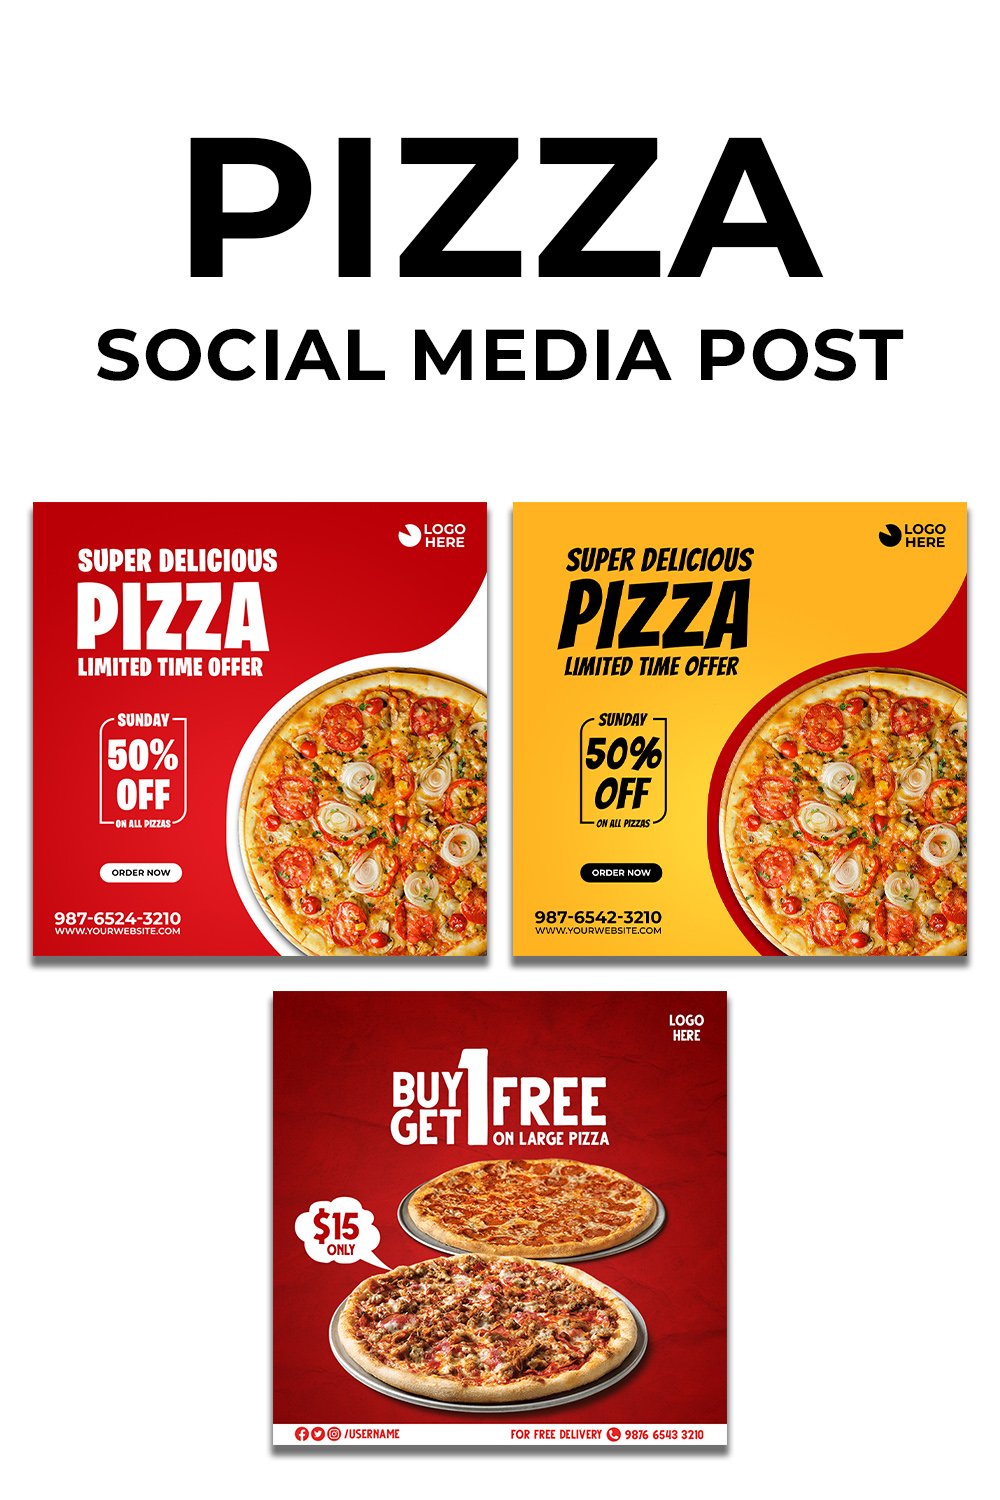 3 Delicious Pizza Menu Restaurant Social Media Templates pinterest preview image.